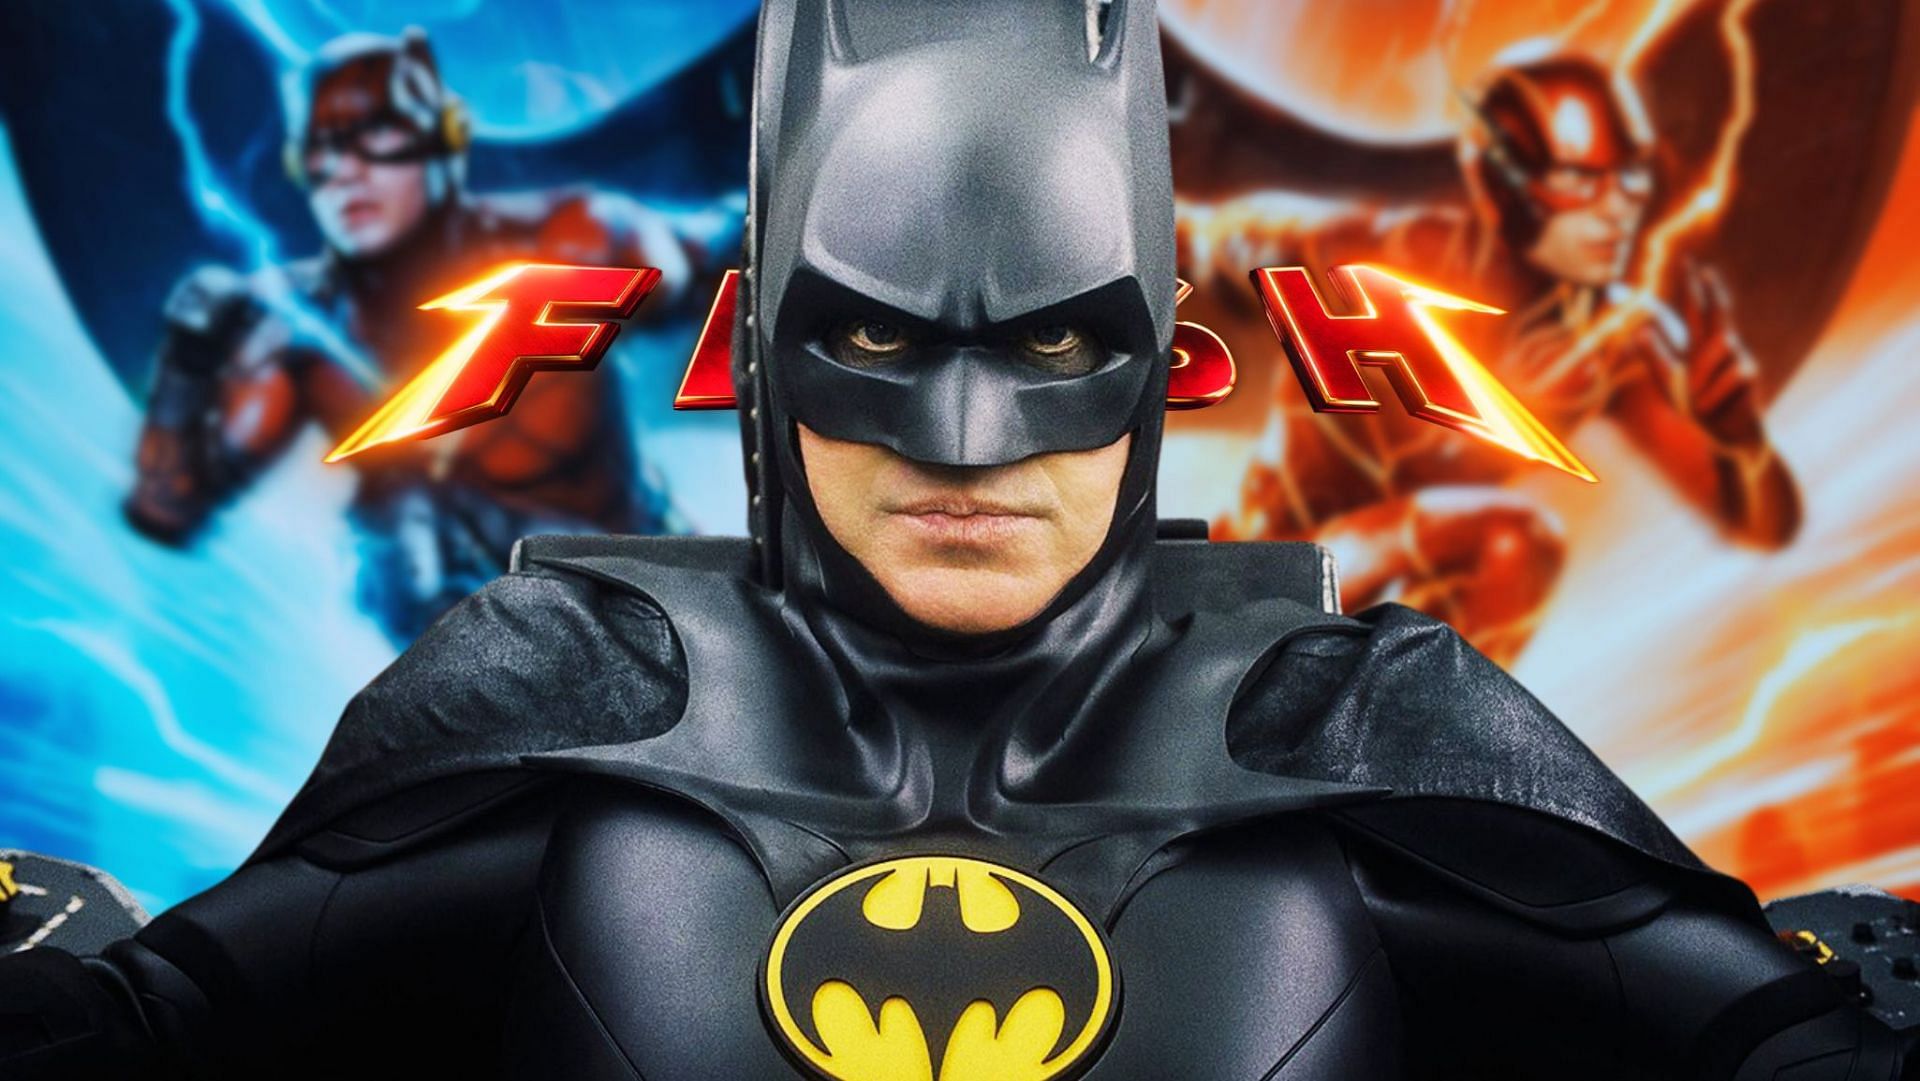 A glimpse into an alternate dimension: The Flash unveils a scruffy Batman played by Michael Keaton (Image via Warner Bros)